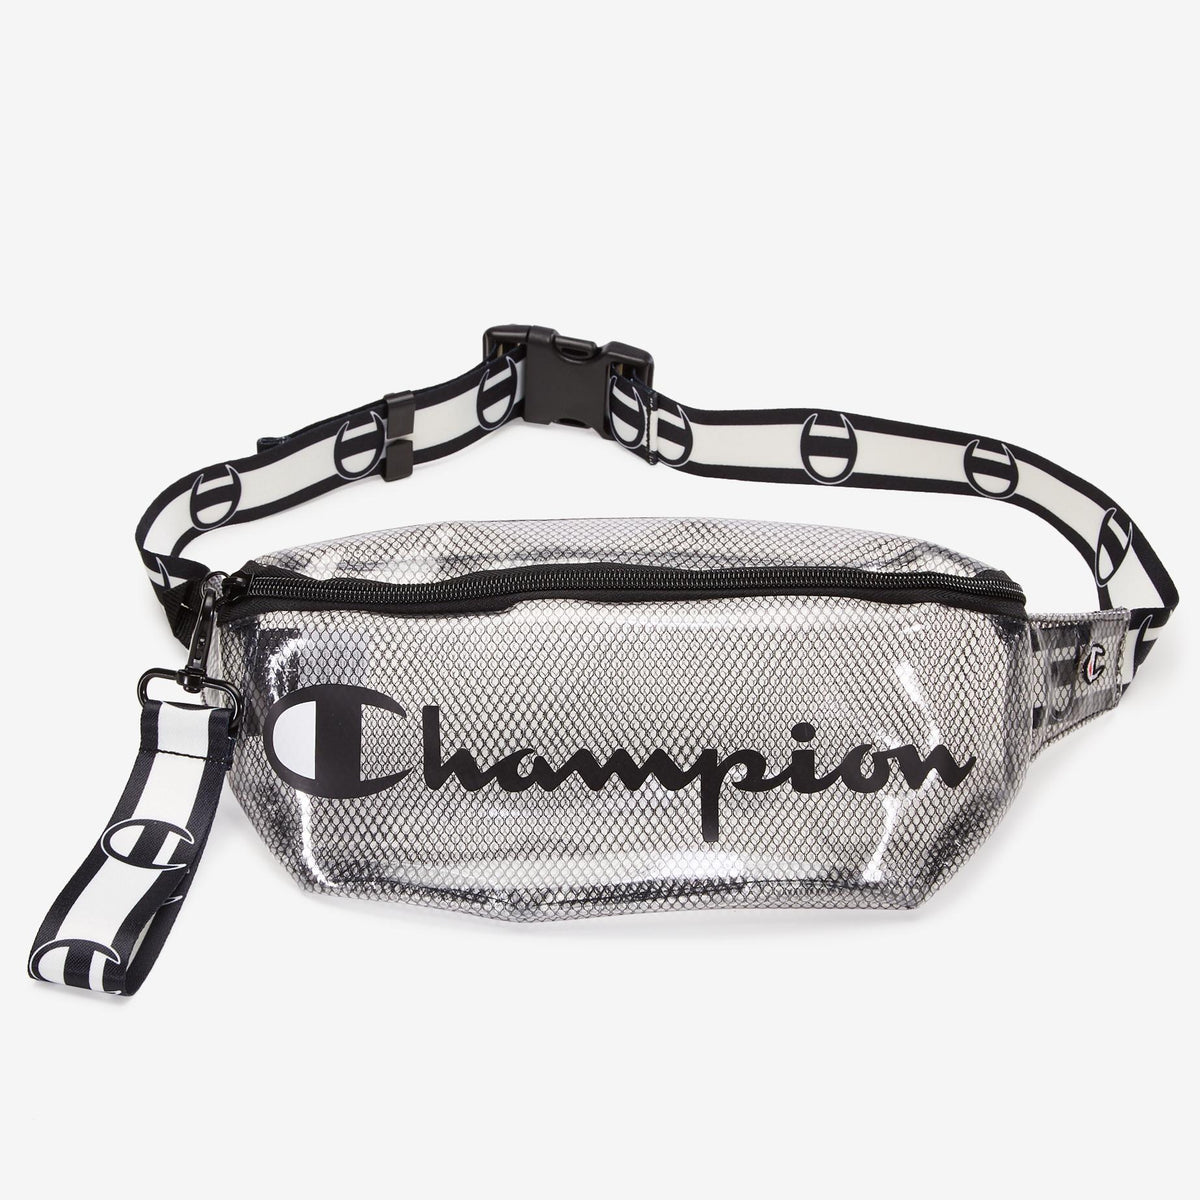 champion fanny pack sale